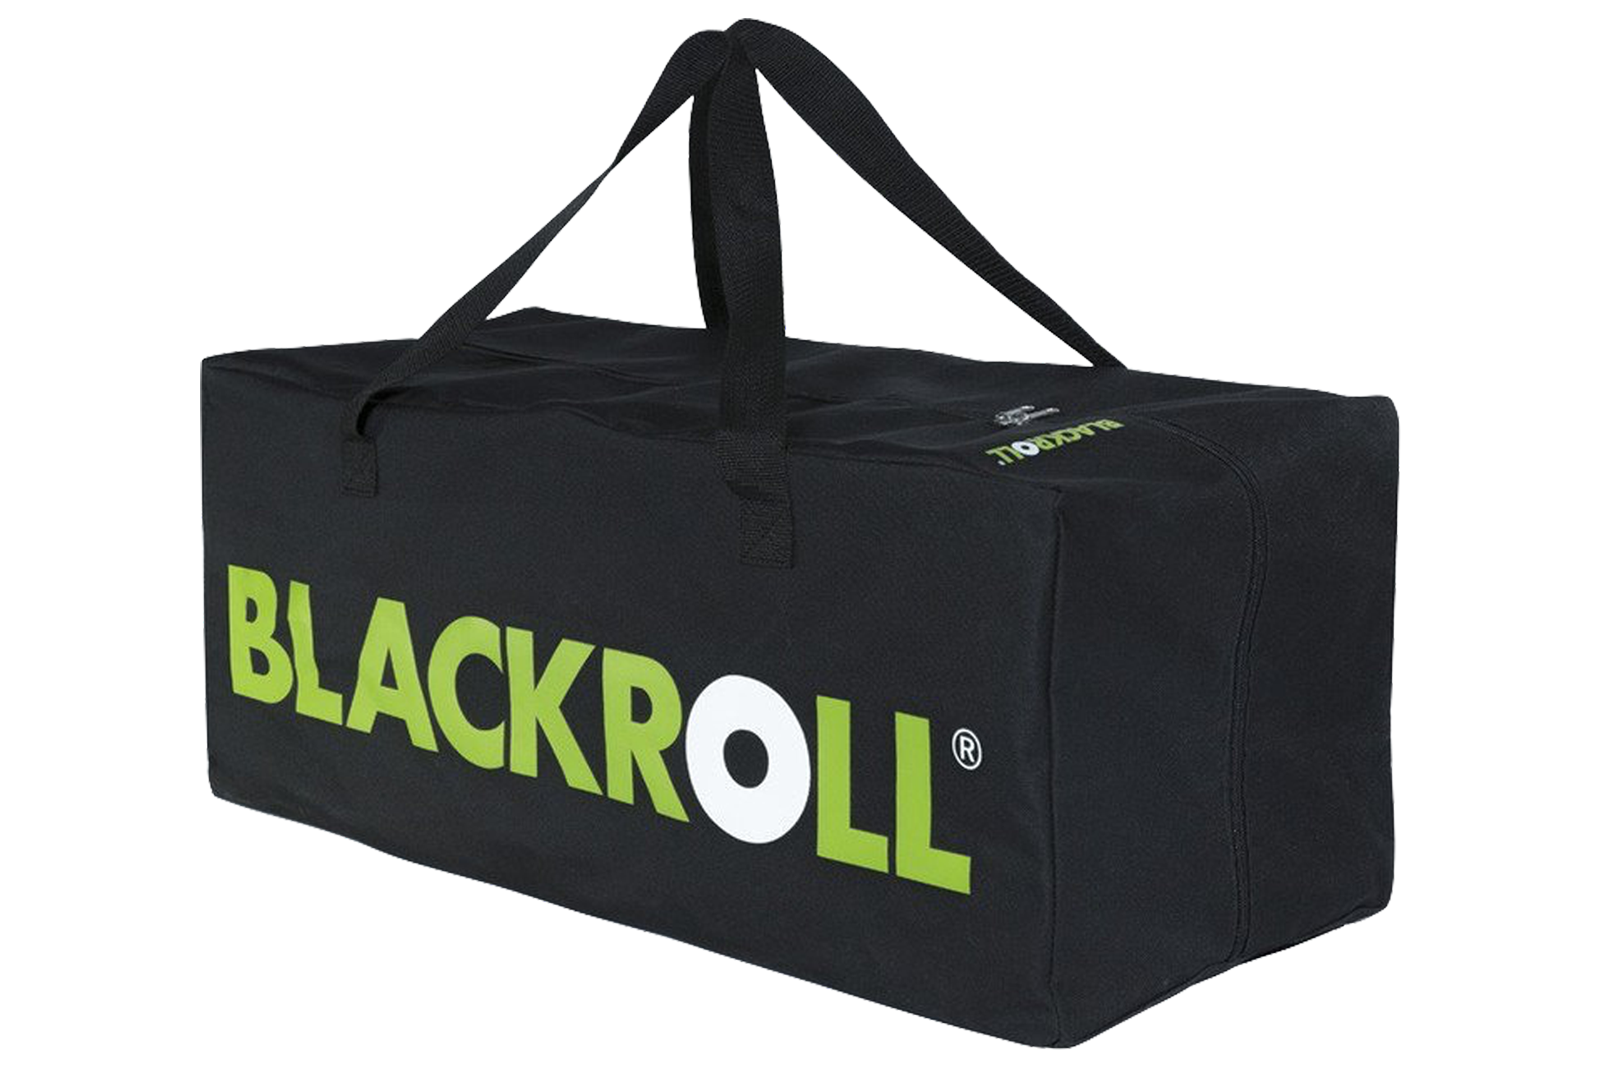 BLACKROLL® Trainer Bag SET including 10x BLACKROLL Standard